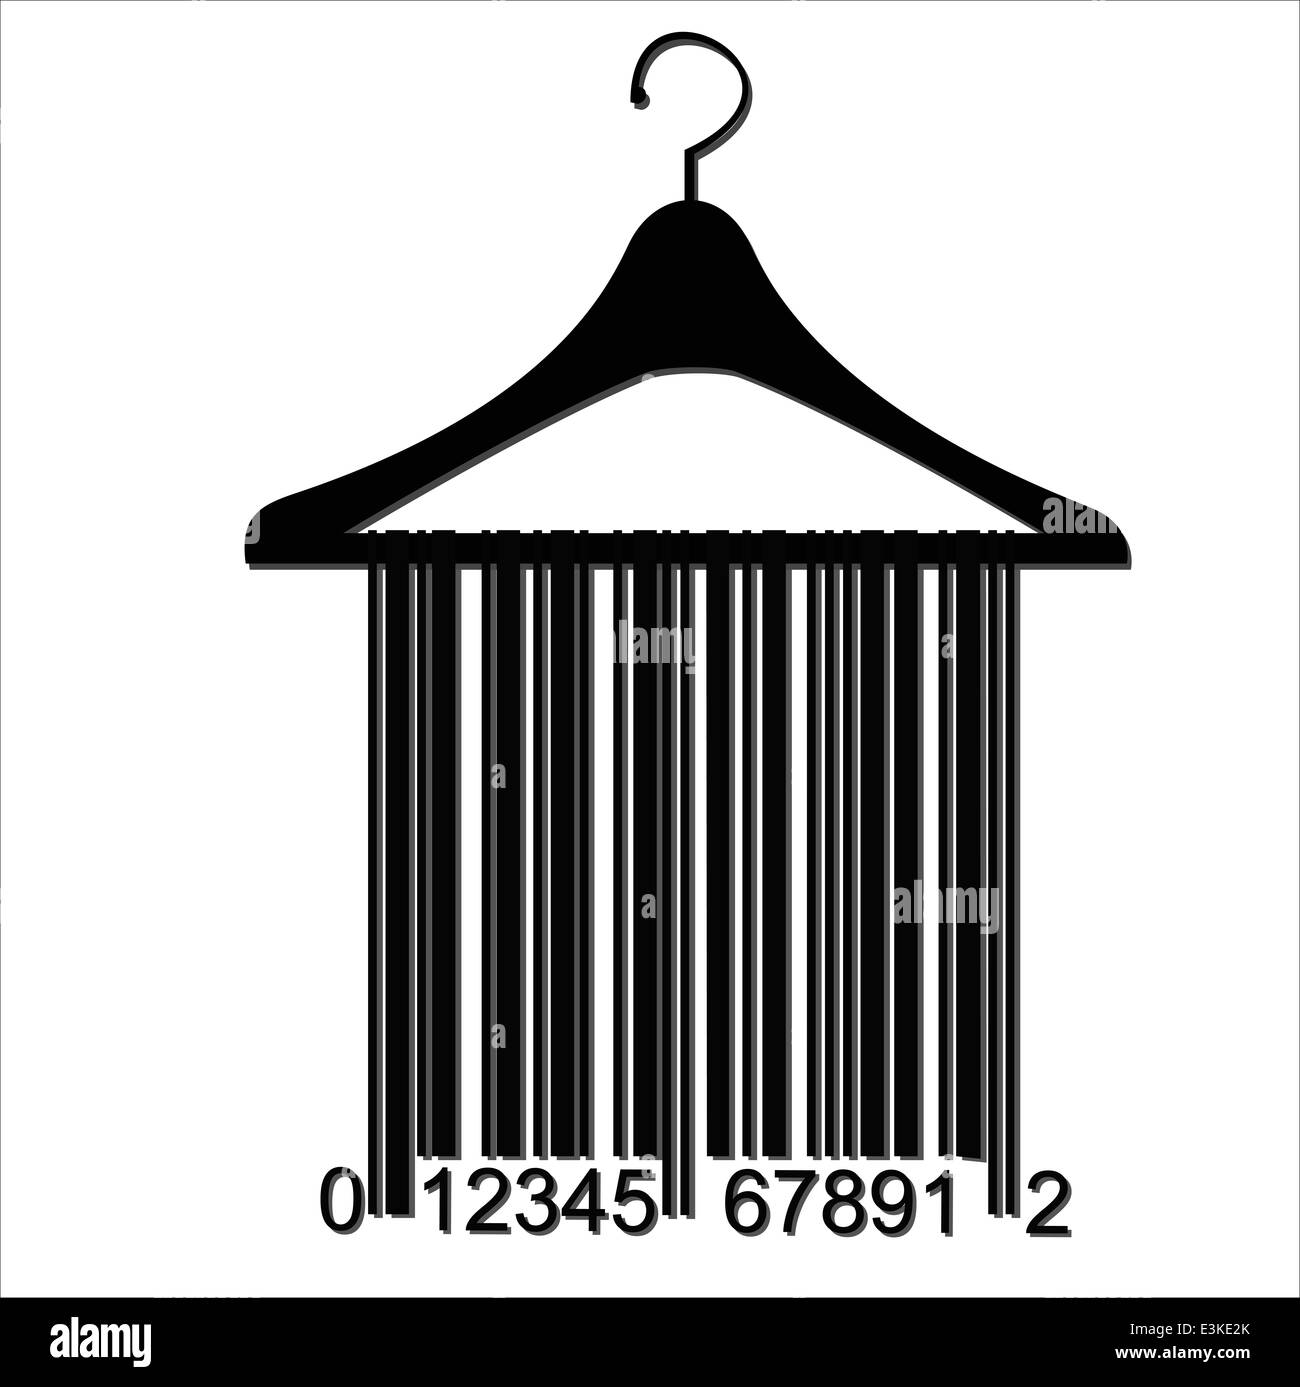 hanger barcode Stock Photo